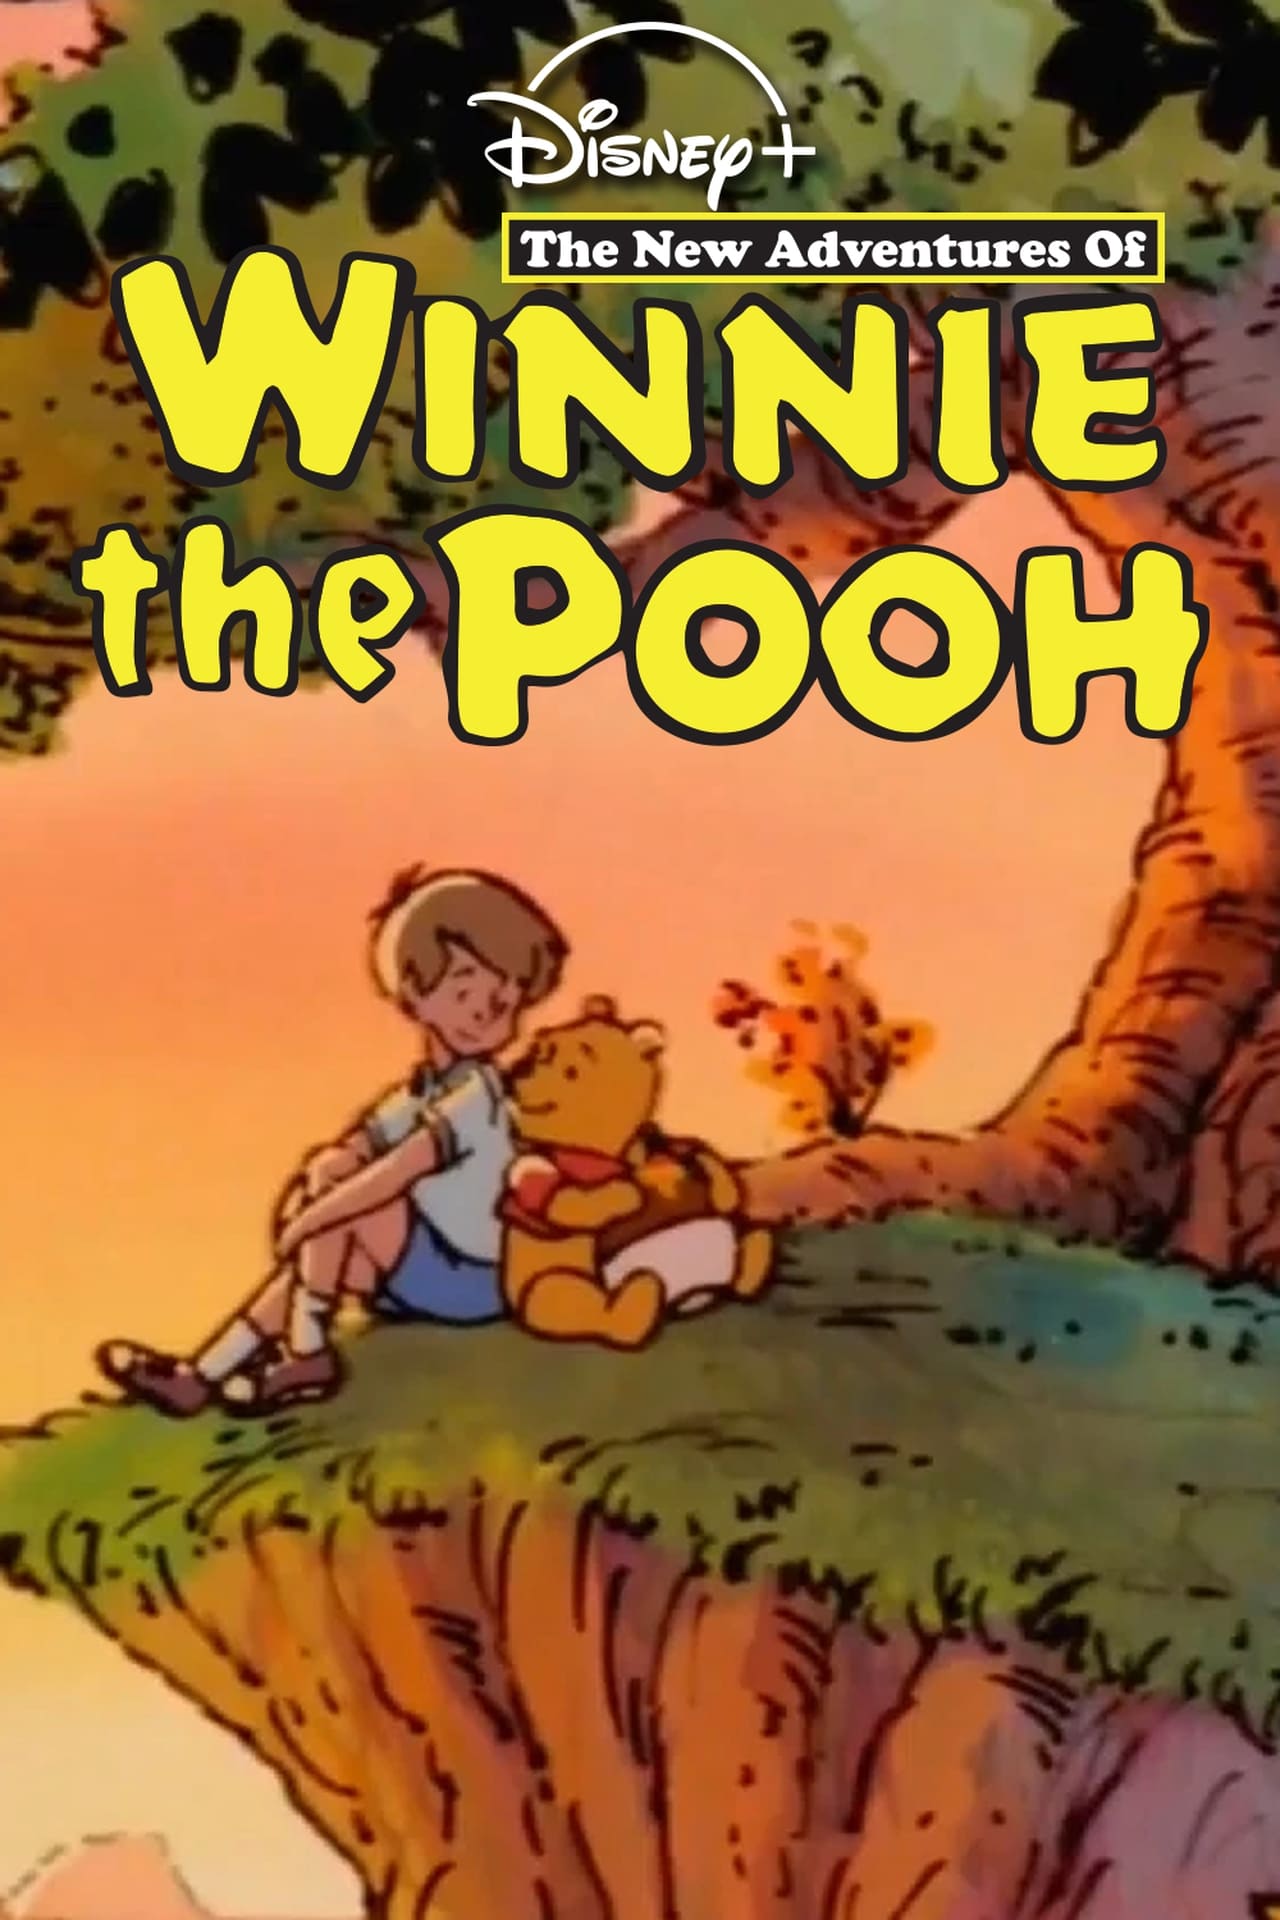 The New Adventures of Winnie the Pooh (1989) S2 EP01&EP06 128Kbps 23.976Fps 48Khz 2.0Ch Disney+ DD+ E-AC3 Turkish Audio TAC